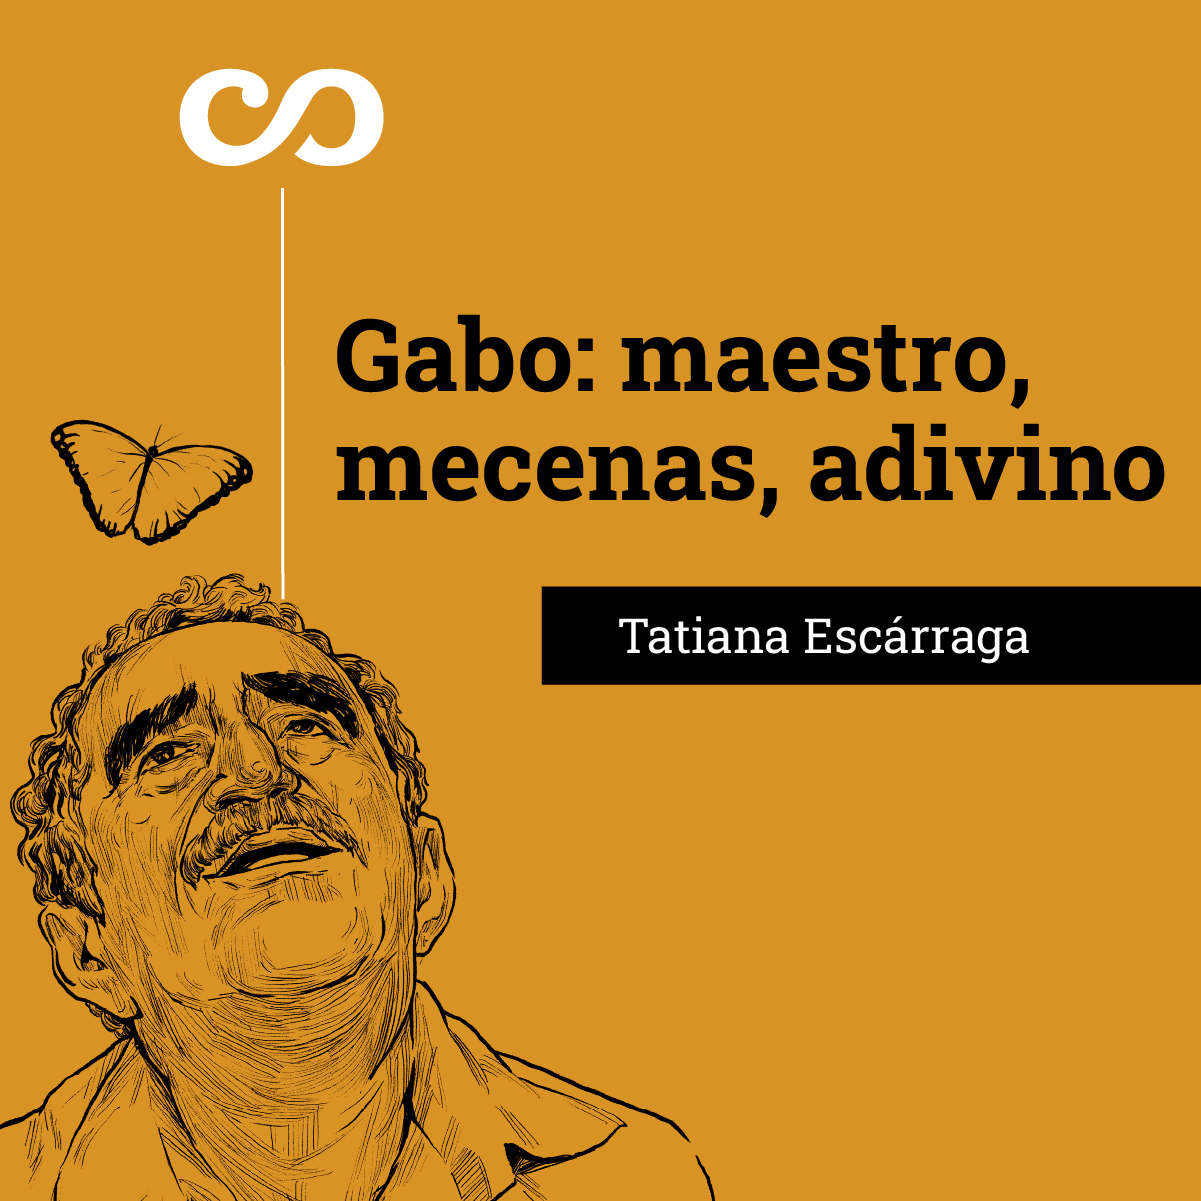 Gabo: maestro, mecenas, adivino